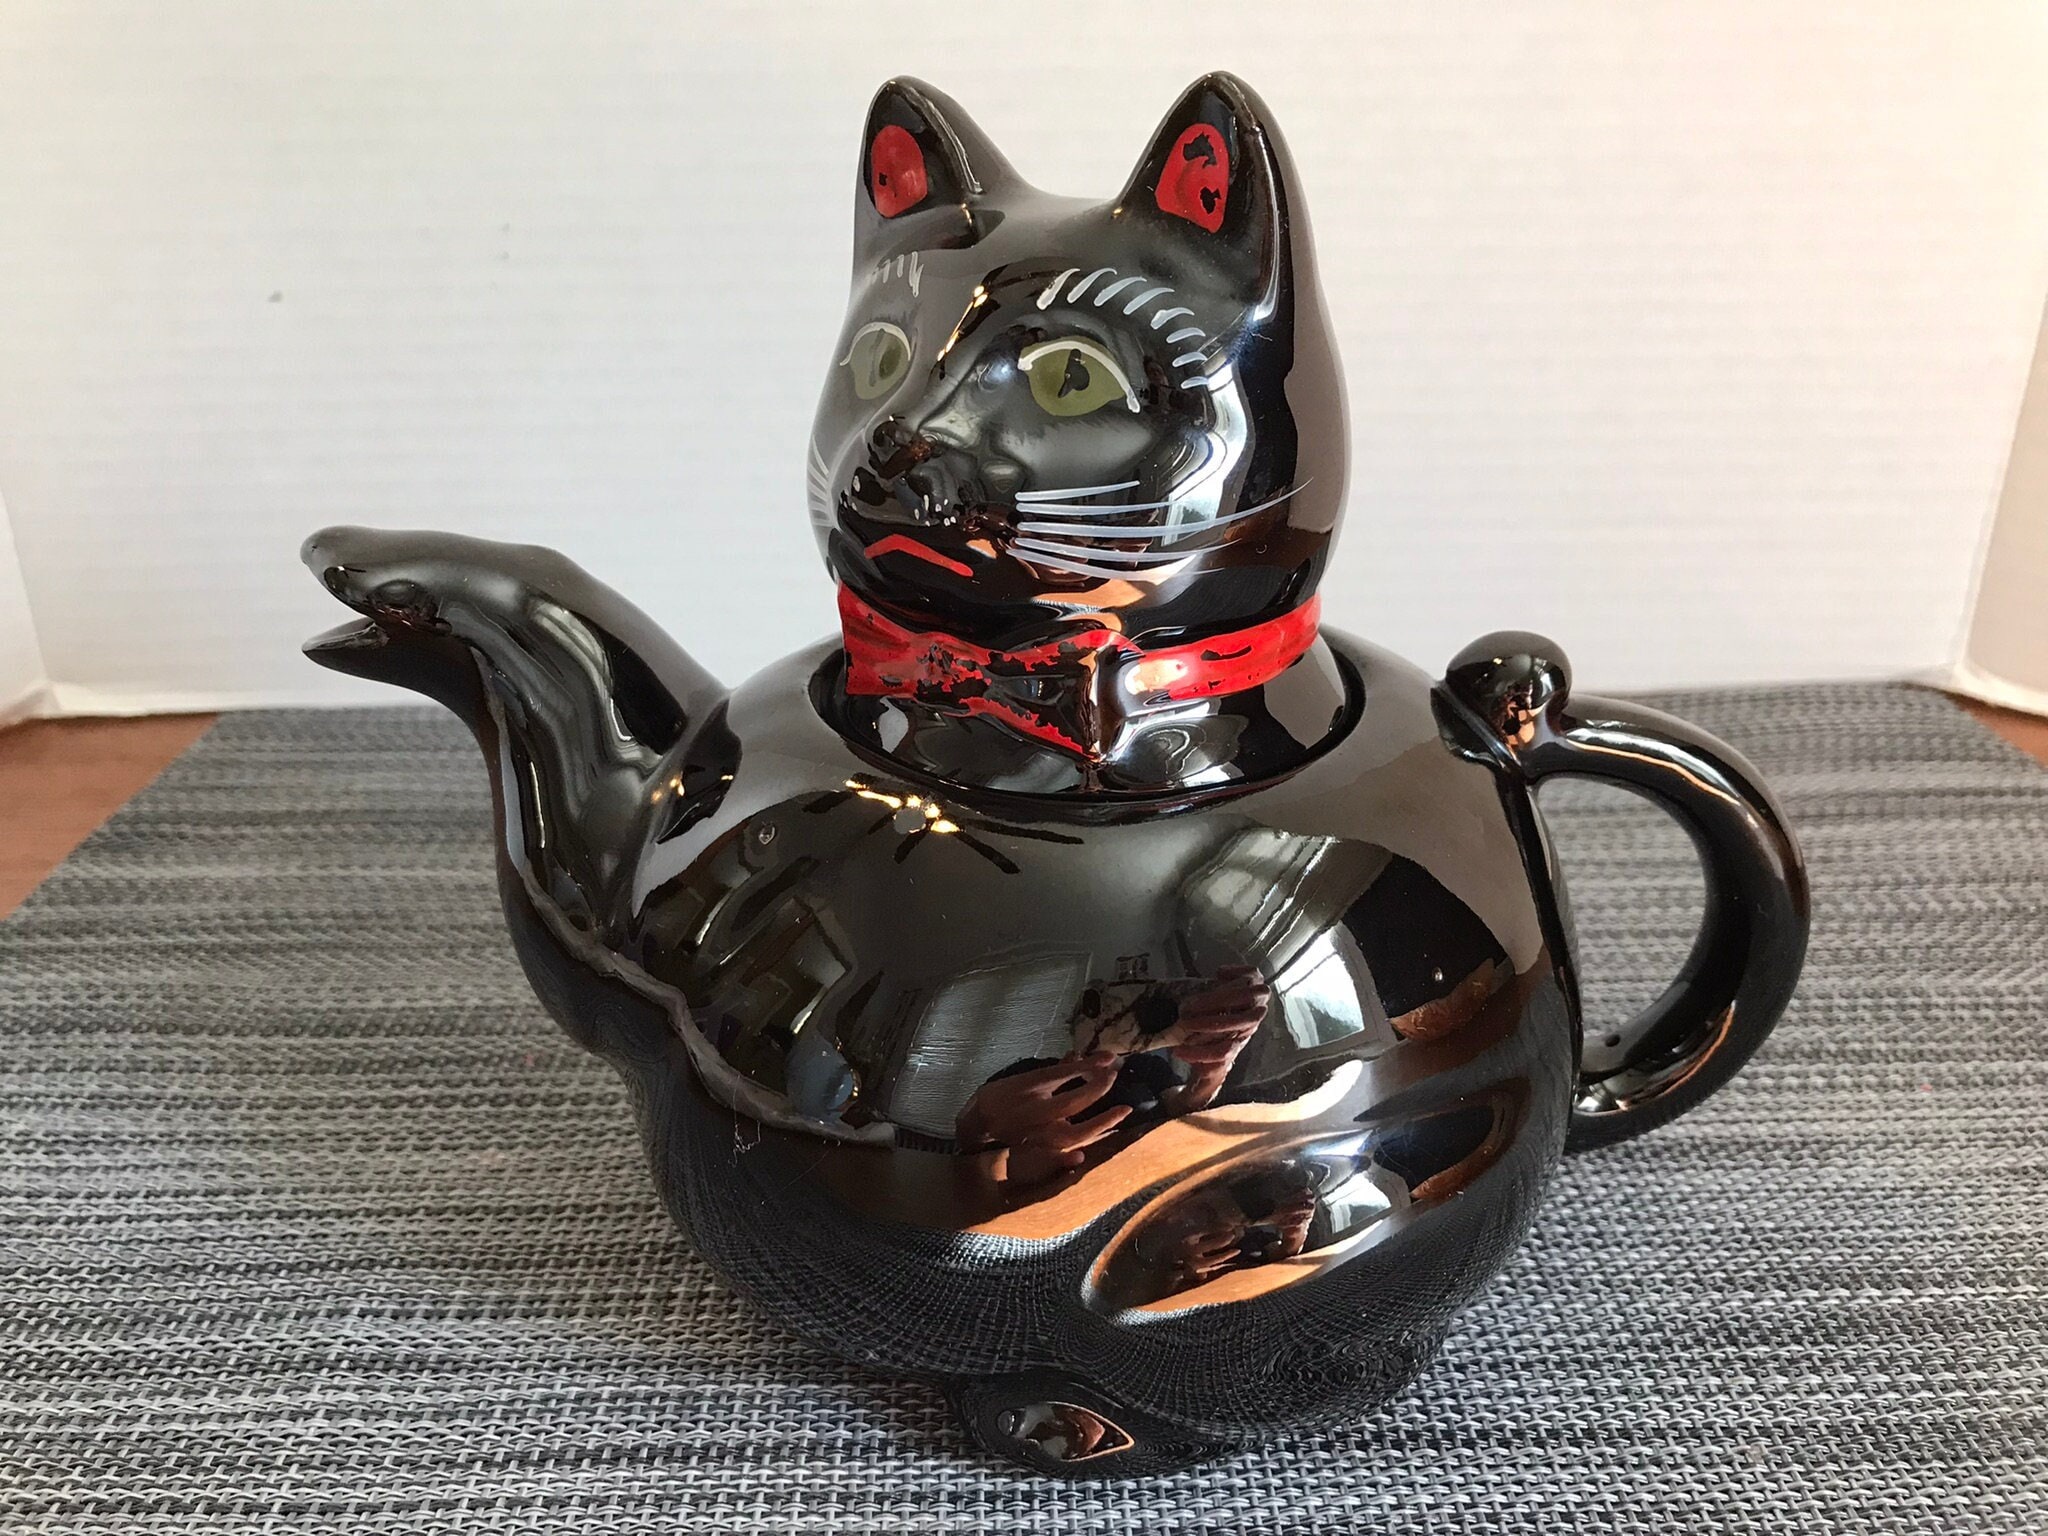 Vintage Cat Teapot Via Ancona Metal Kitty Cat Whistling Tea Kettle Teapot